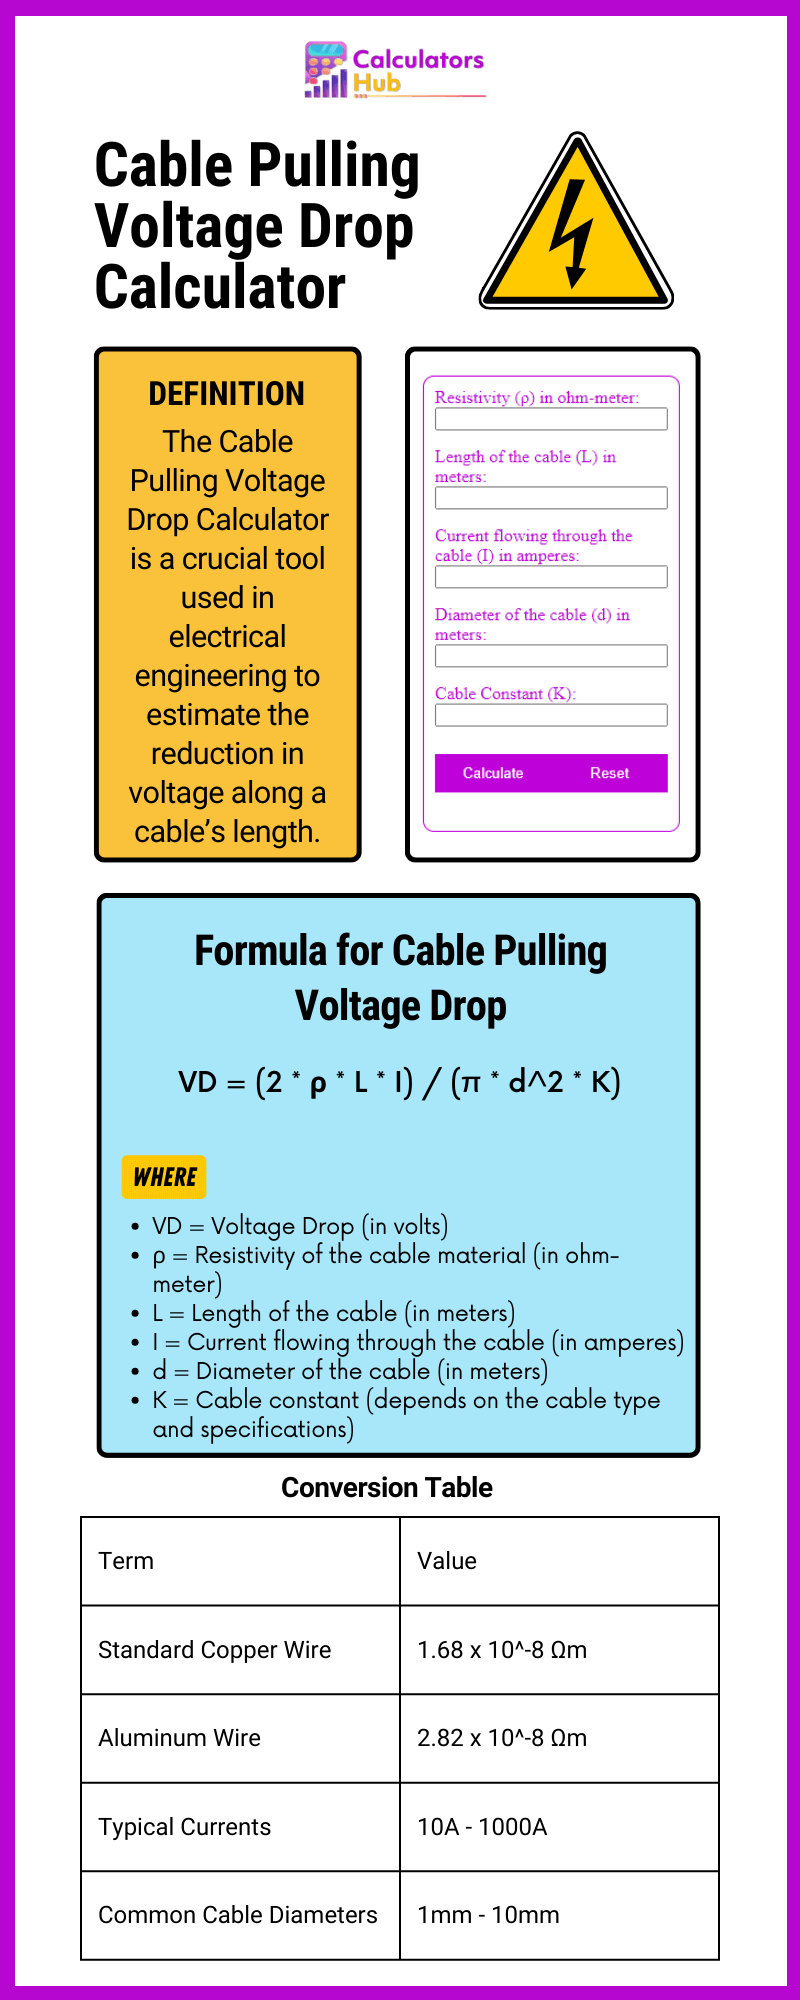 Cable Pulling Voltage Drop Calculator